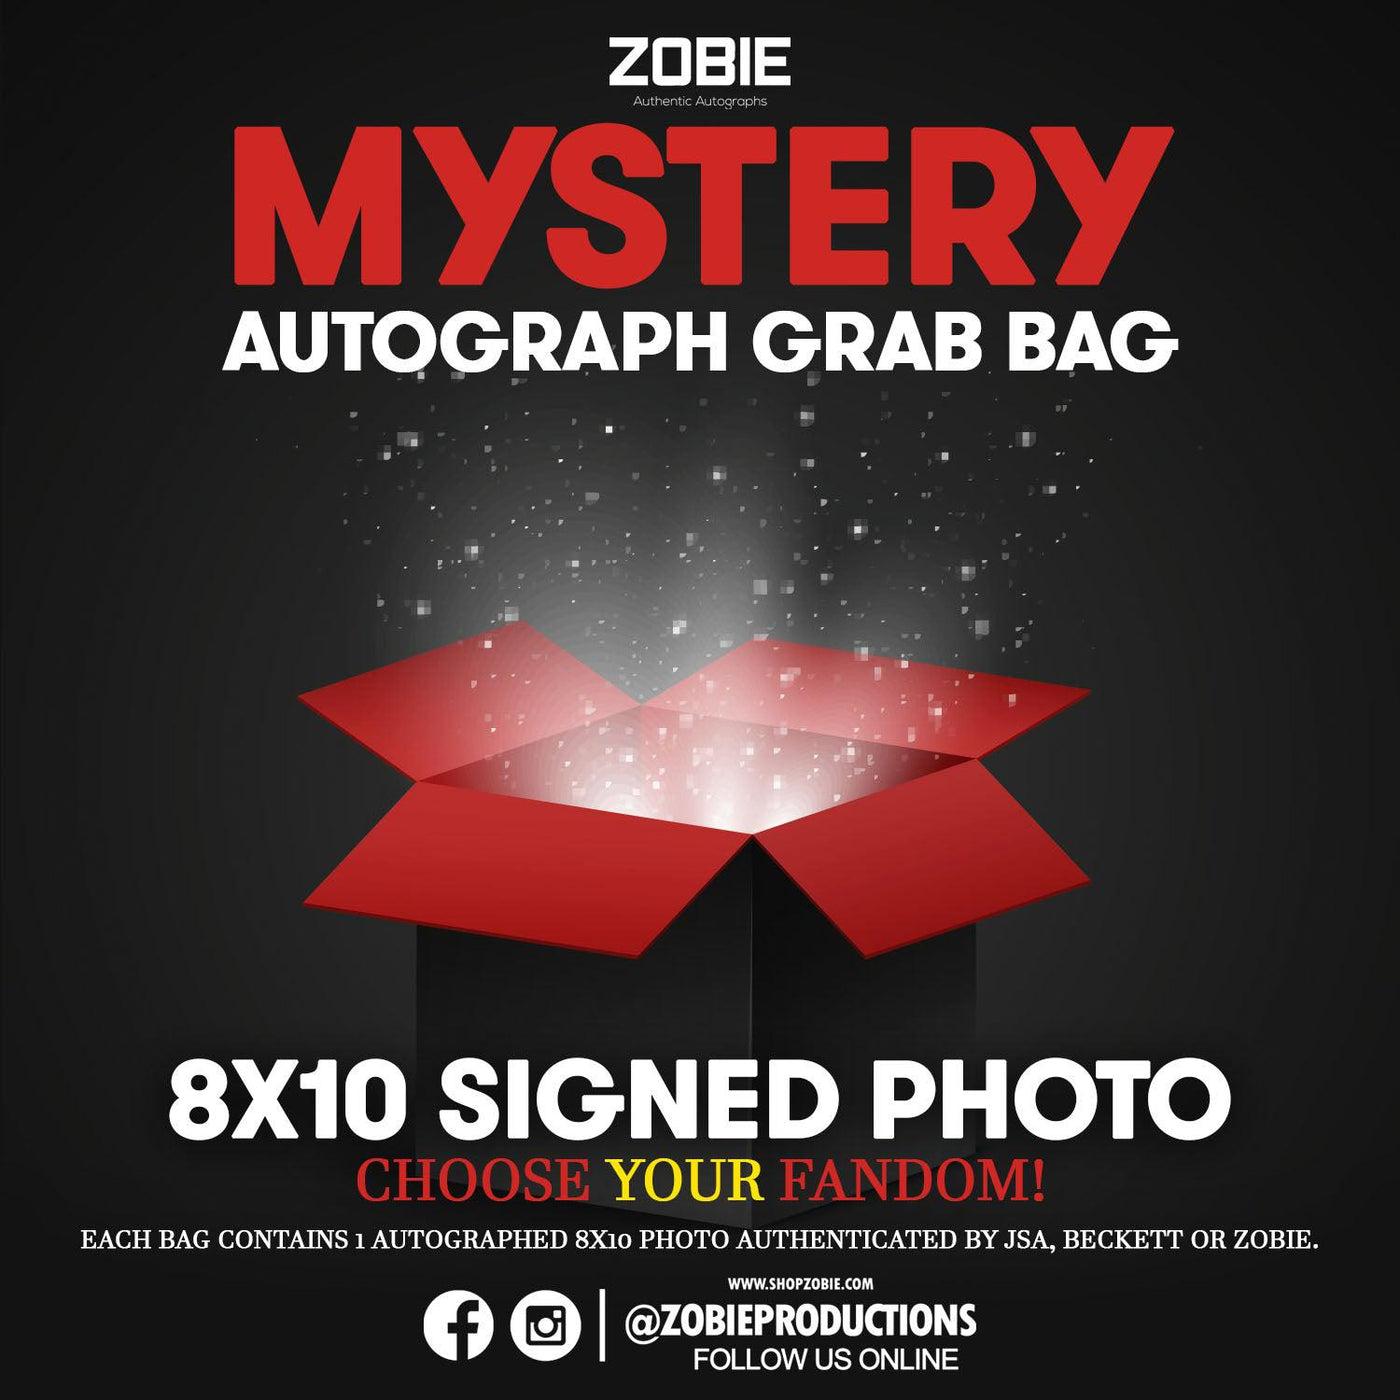 Zobie Mystery Autograph Grab Bag - 8x10 Photo